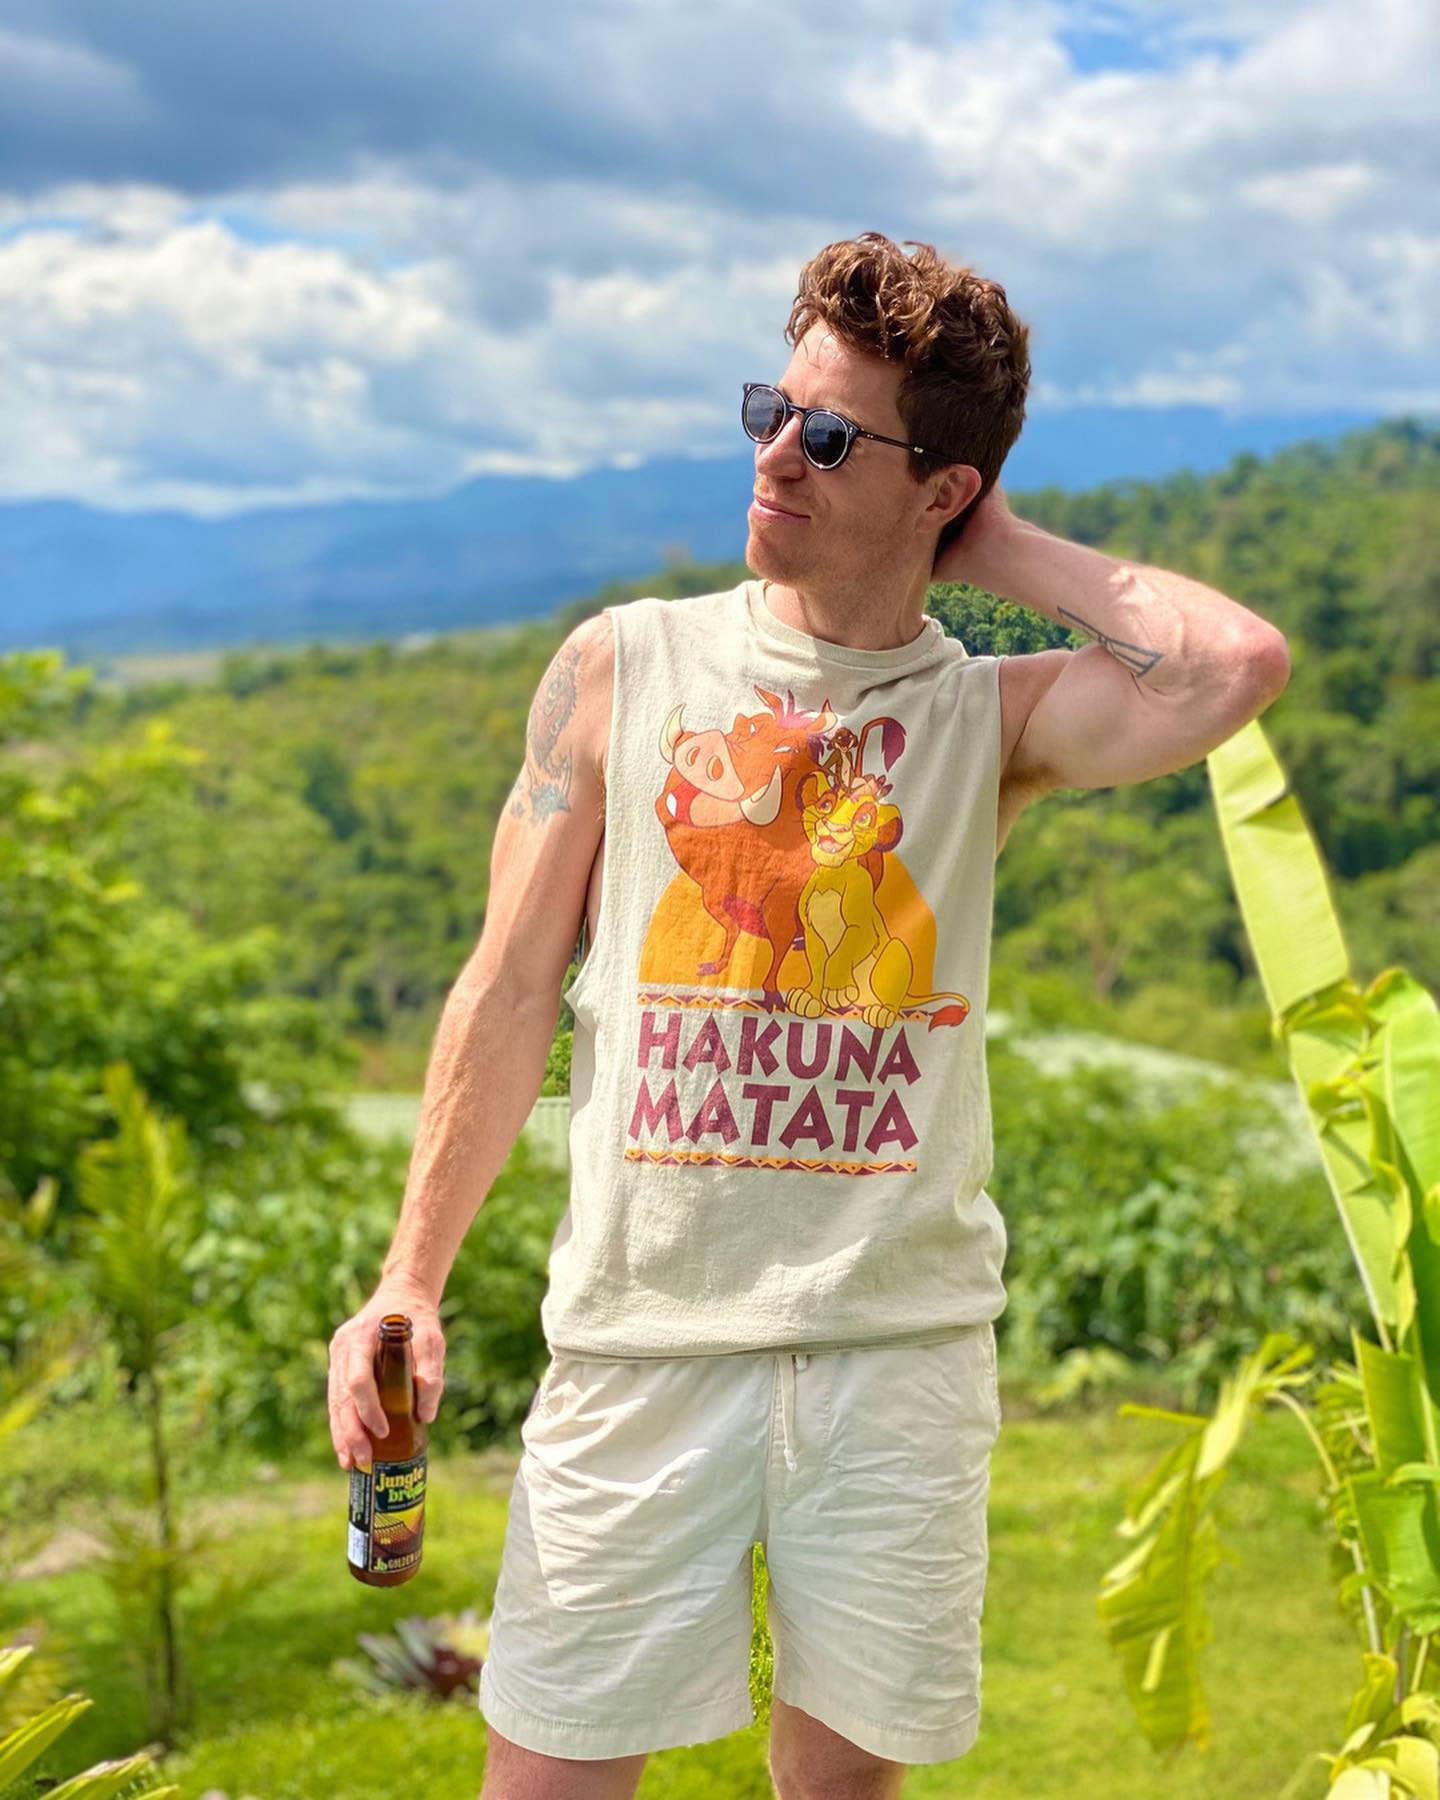 Shaun White and Nina Dobrev are Visiting Costa Rica 